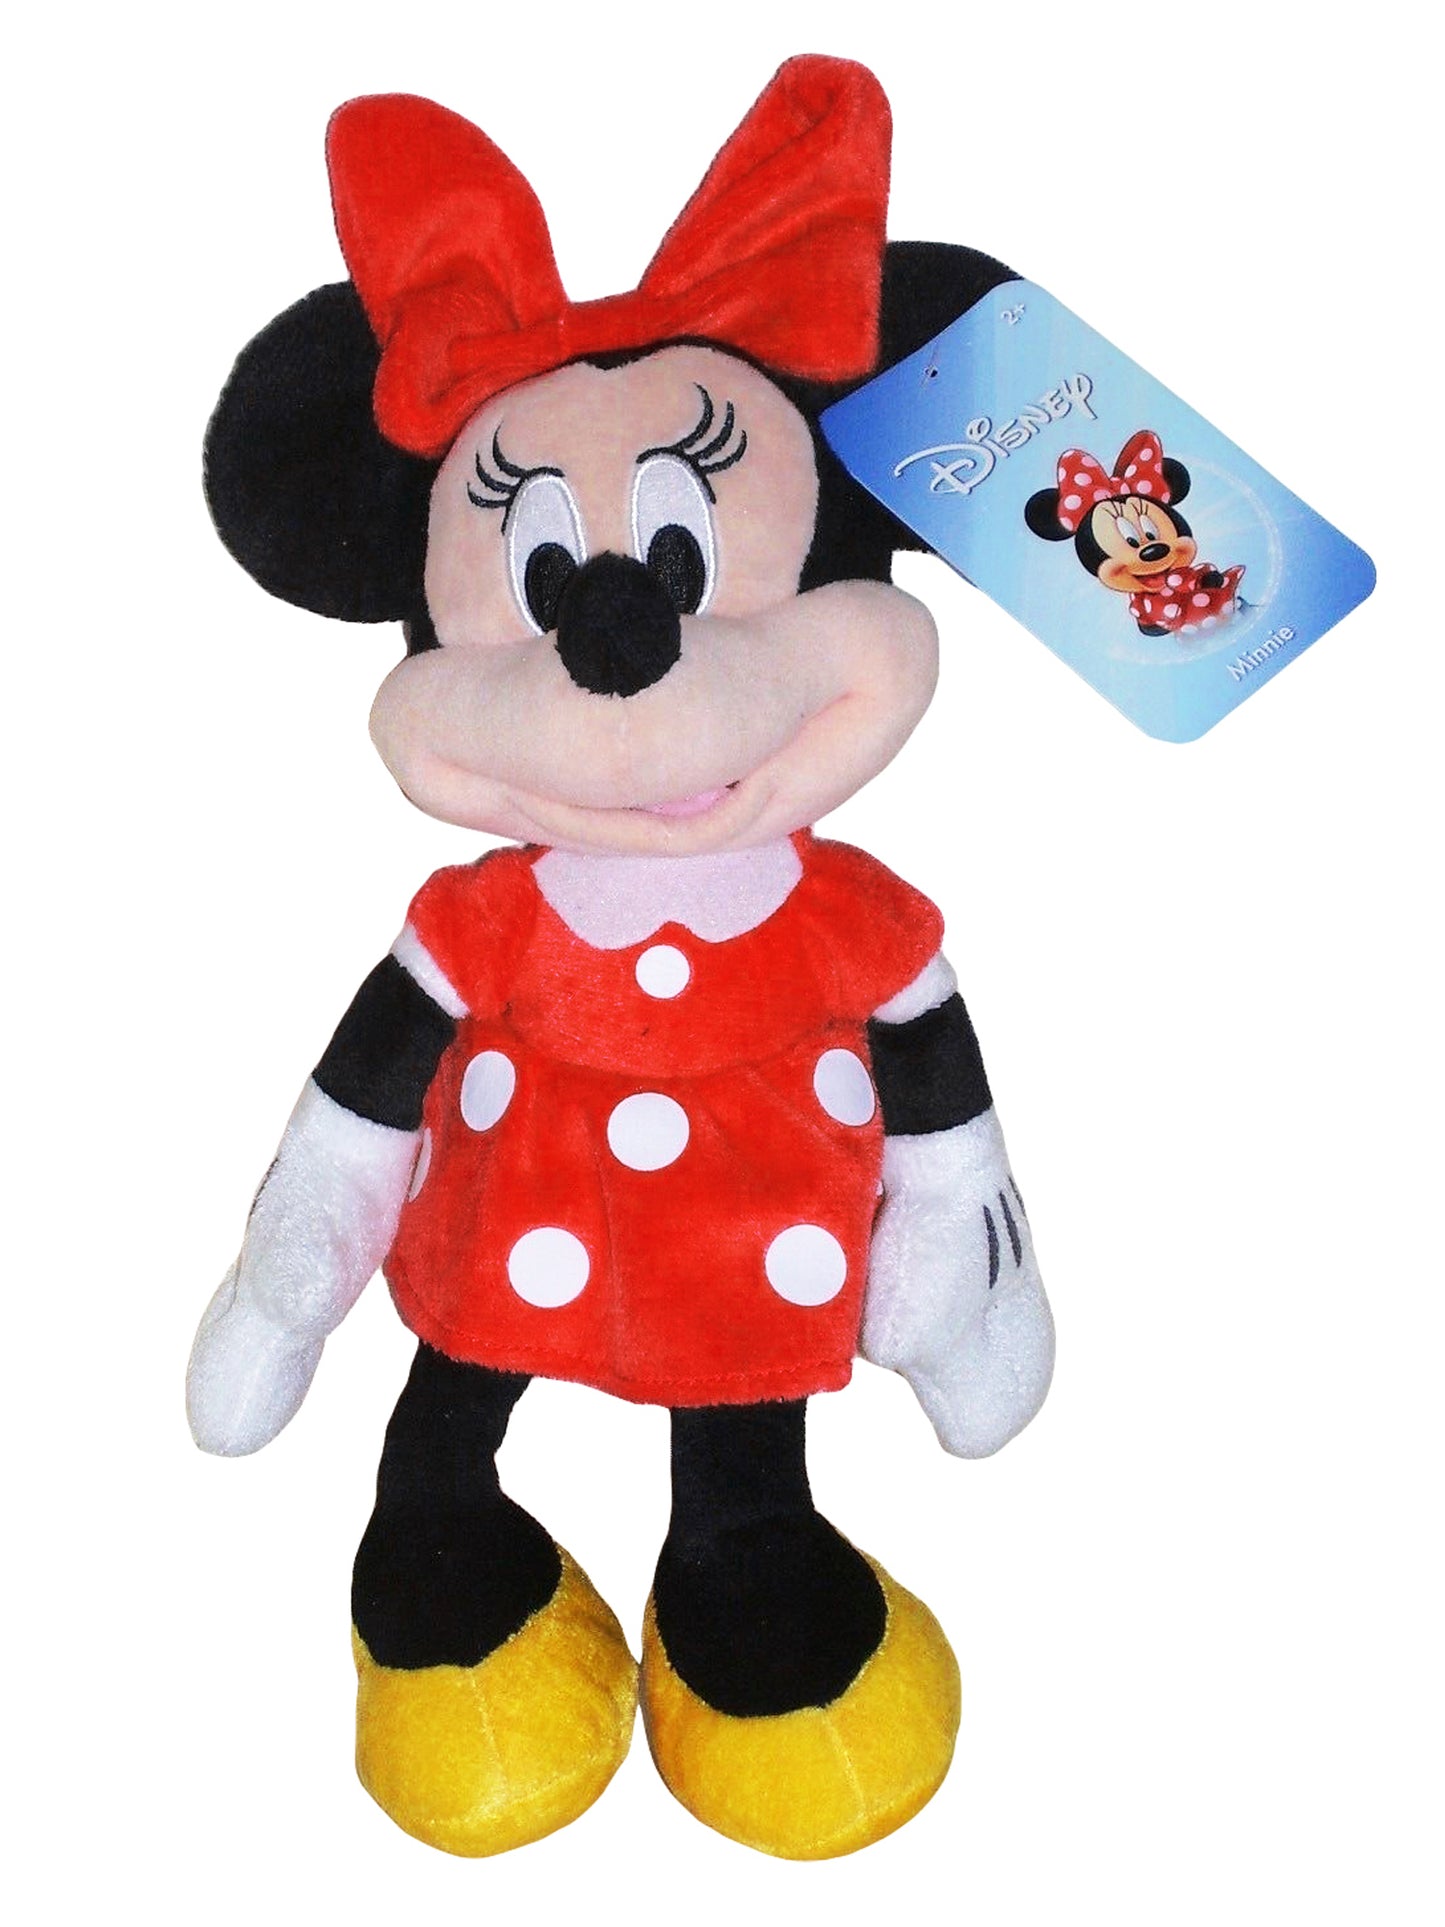 Minnie Mouse Plush Doll 11" Beanbag Red Dress Disney Girls Stuffed Toy